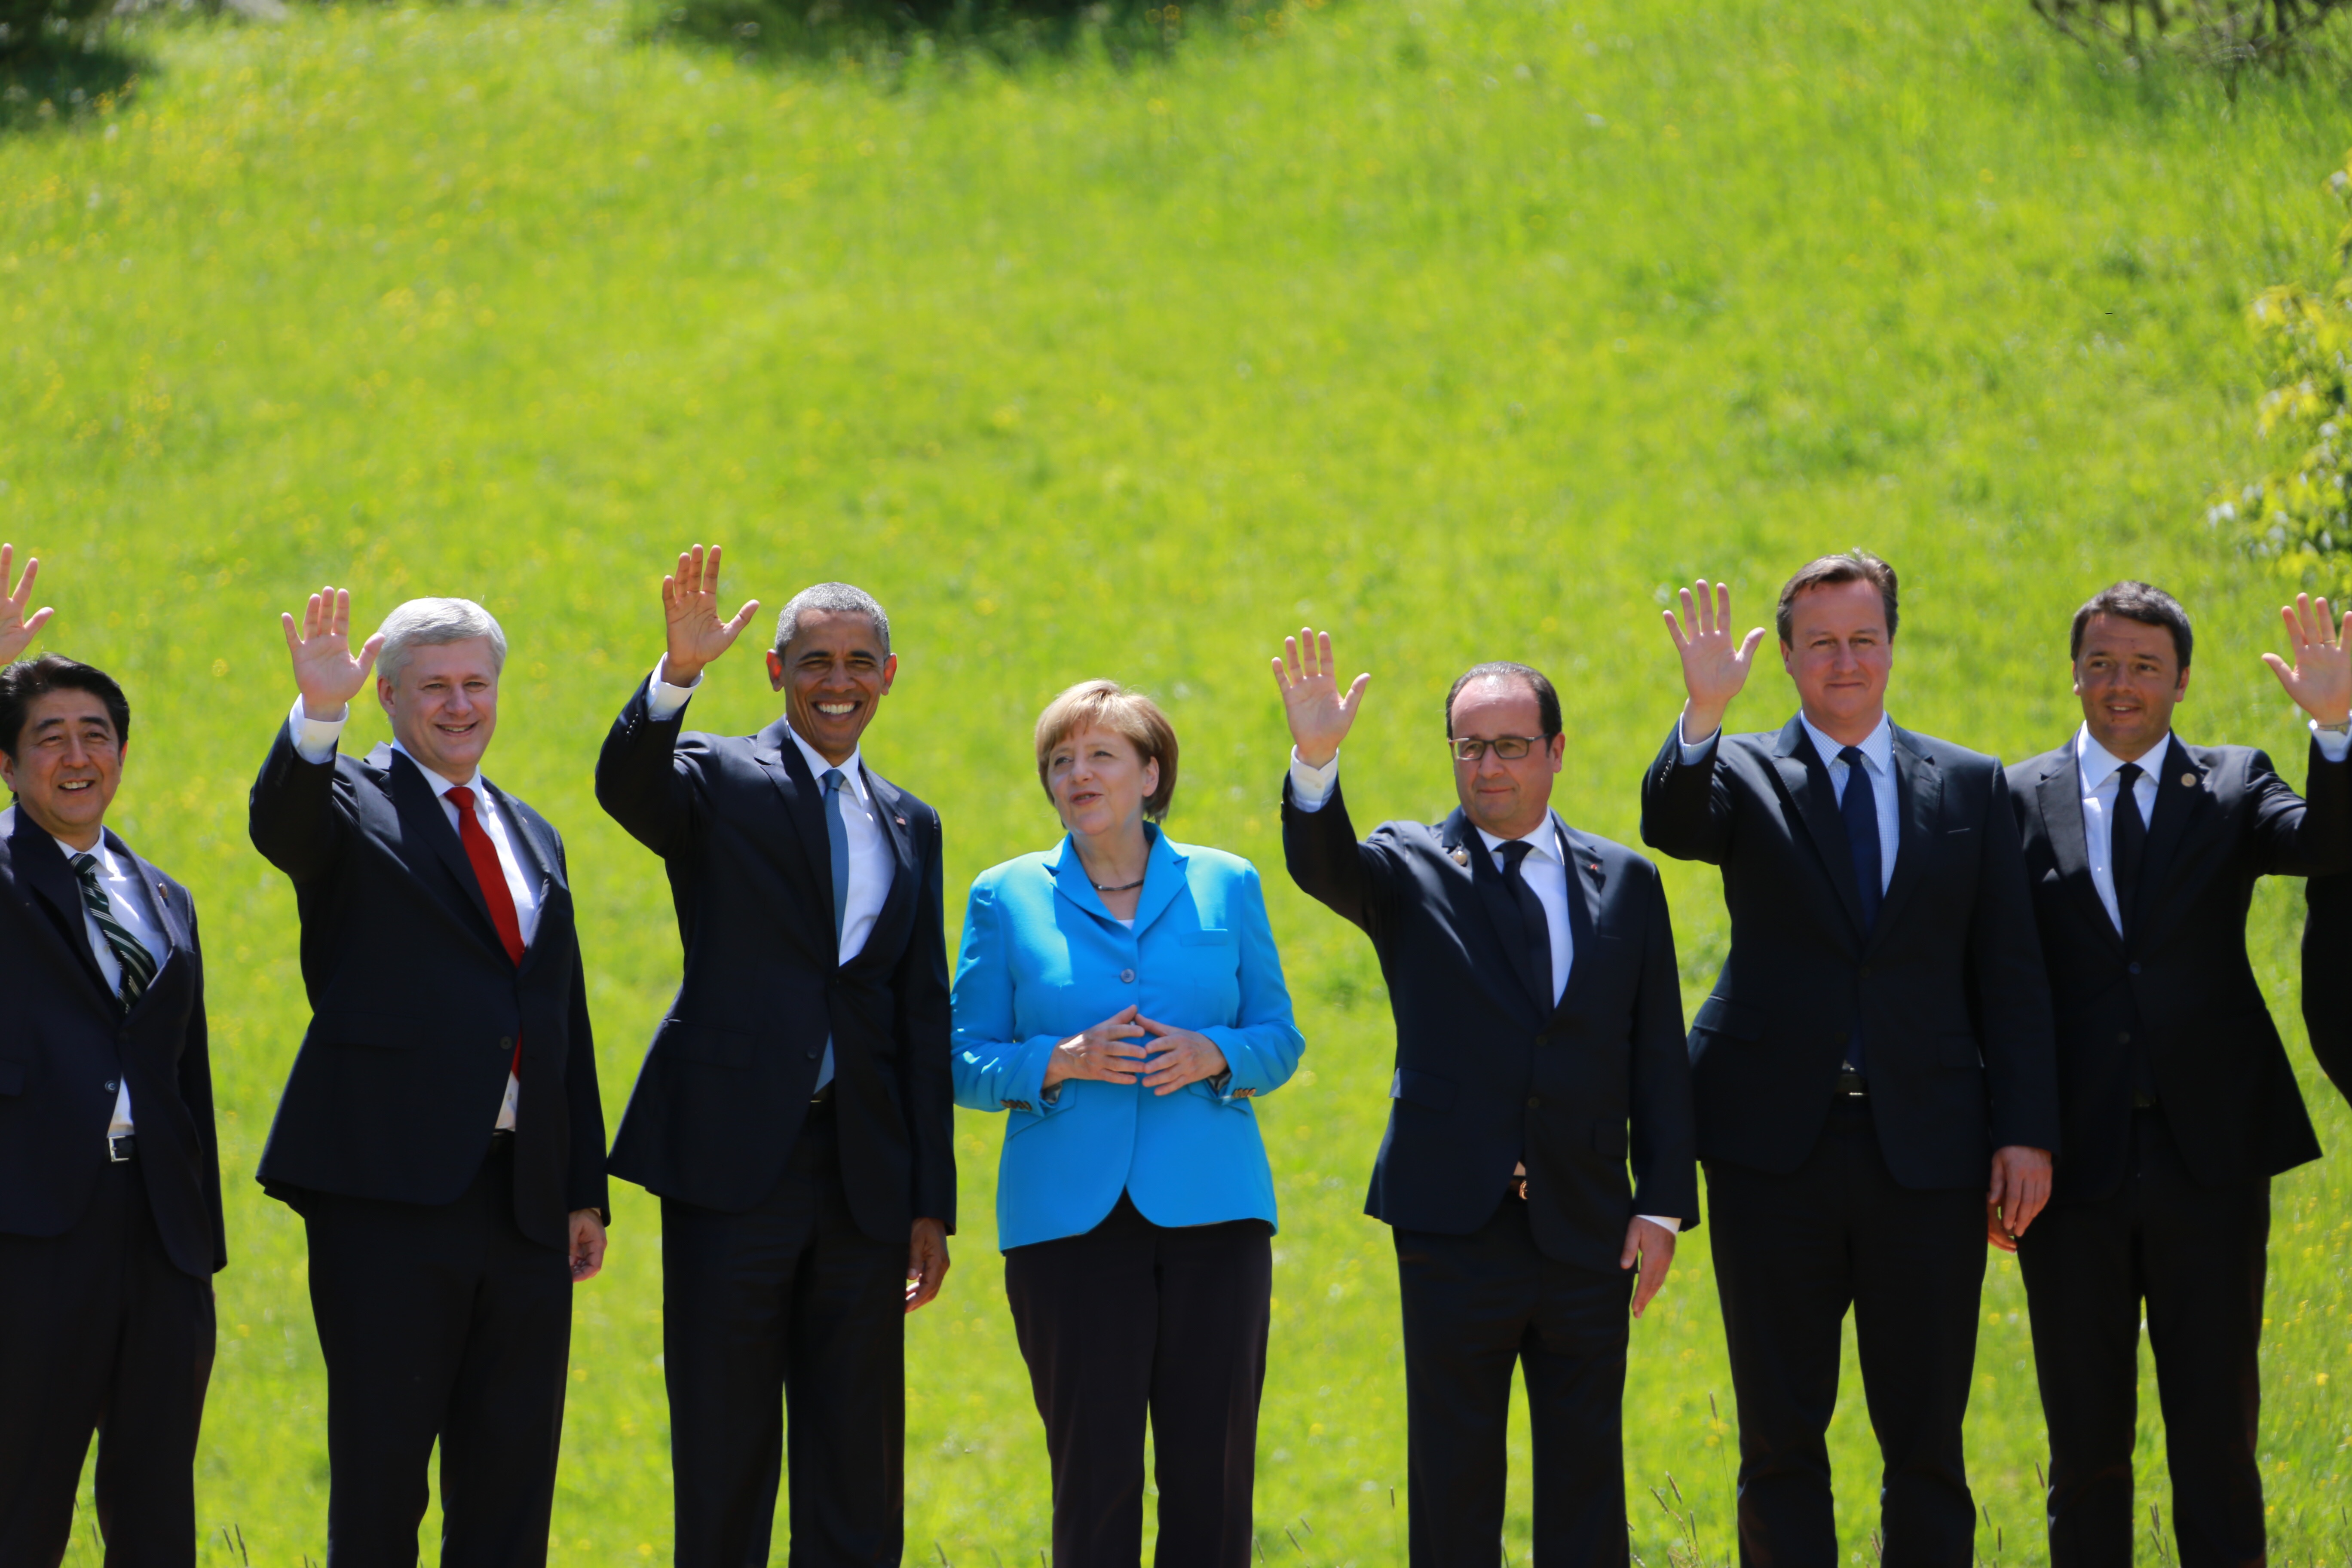 G7 world leaders (l-r):  Shinzō Abe, Barack Obama, Angela Merkel, François Hollande, David Cameron, and Matteo Renzi in Germany